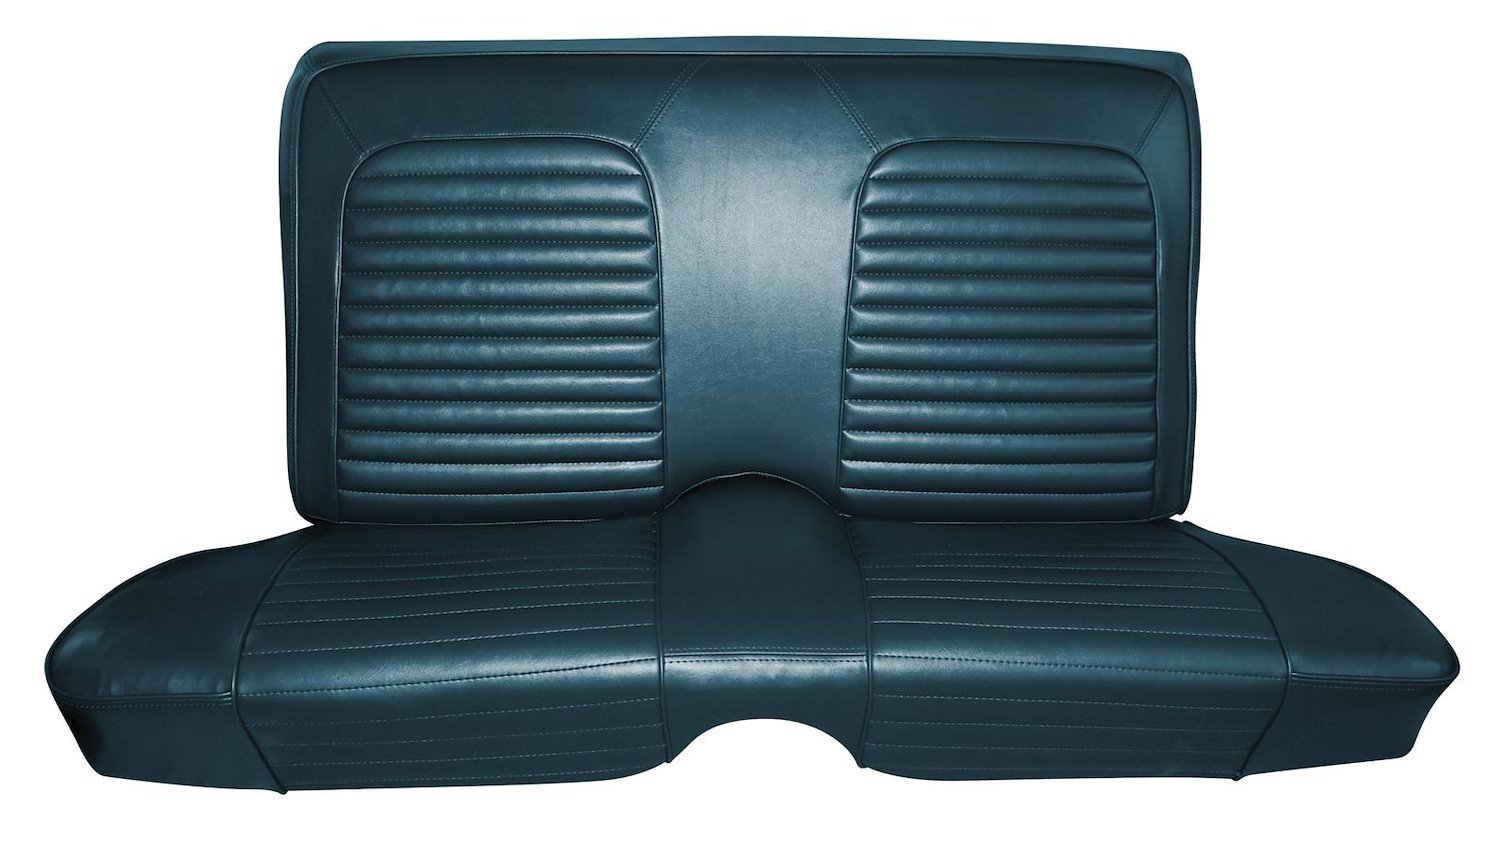 1966 MERUCURY HT REAR BENCH SEAT Hardtop Interior Rear Bench Seat Upholstery Set